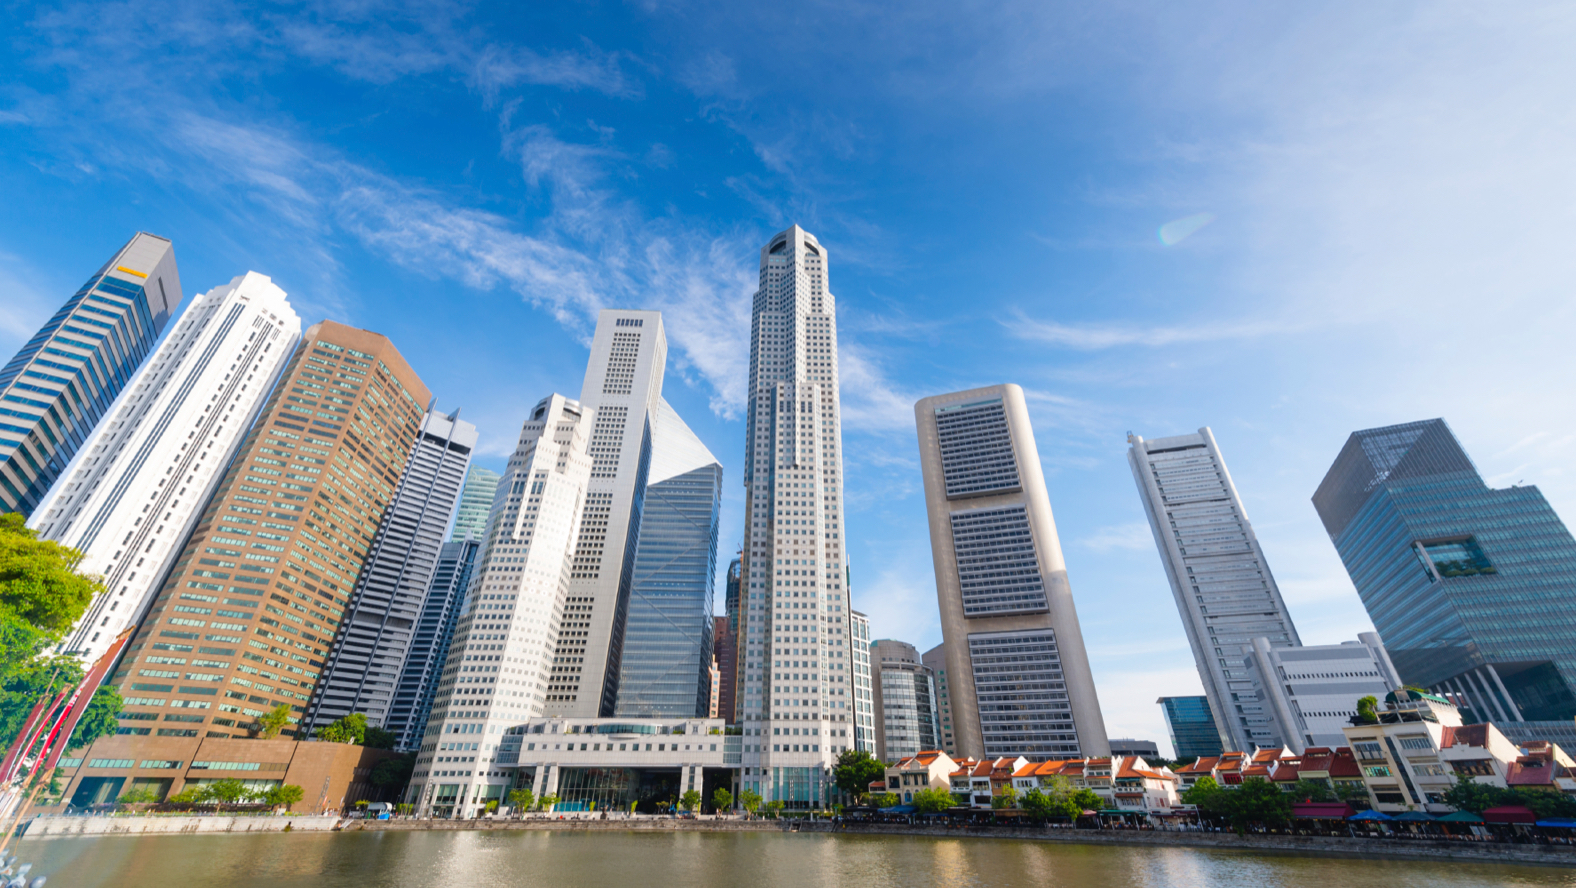 Singapore’s monetary policy framework